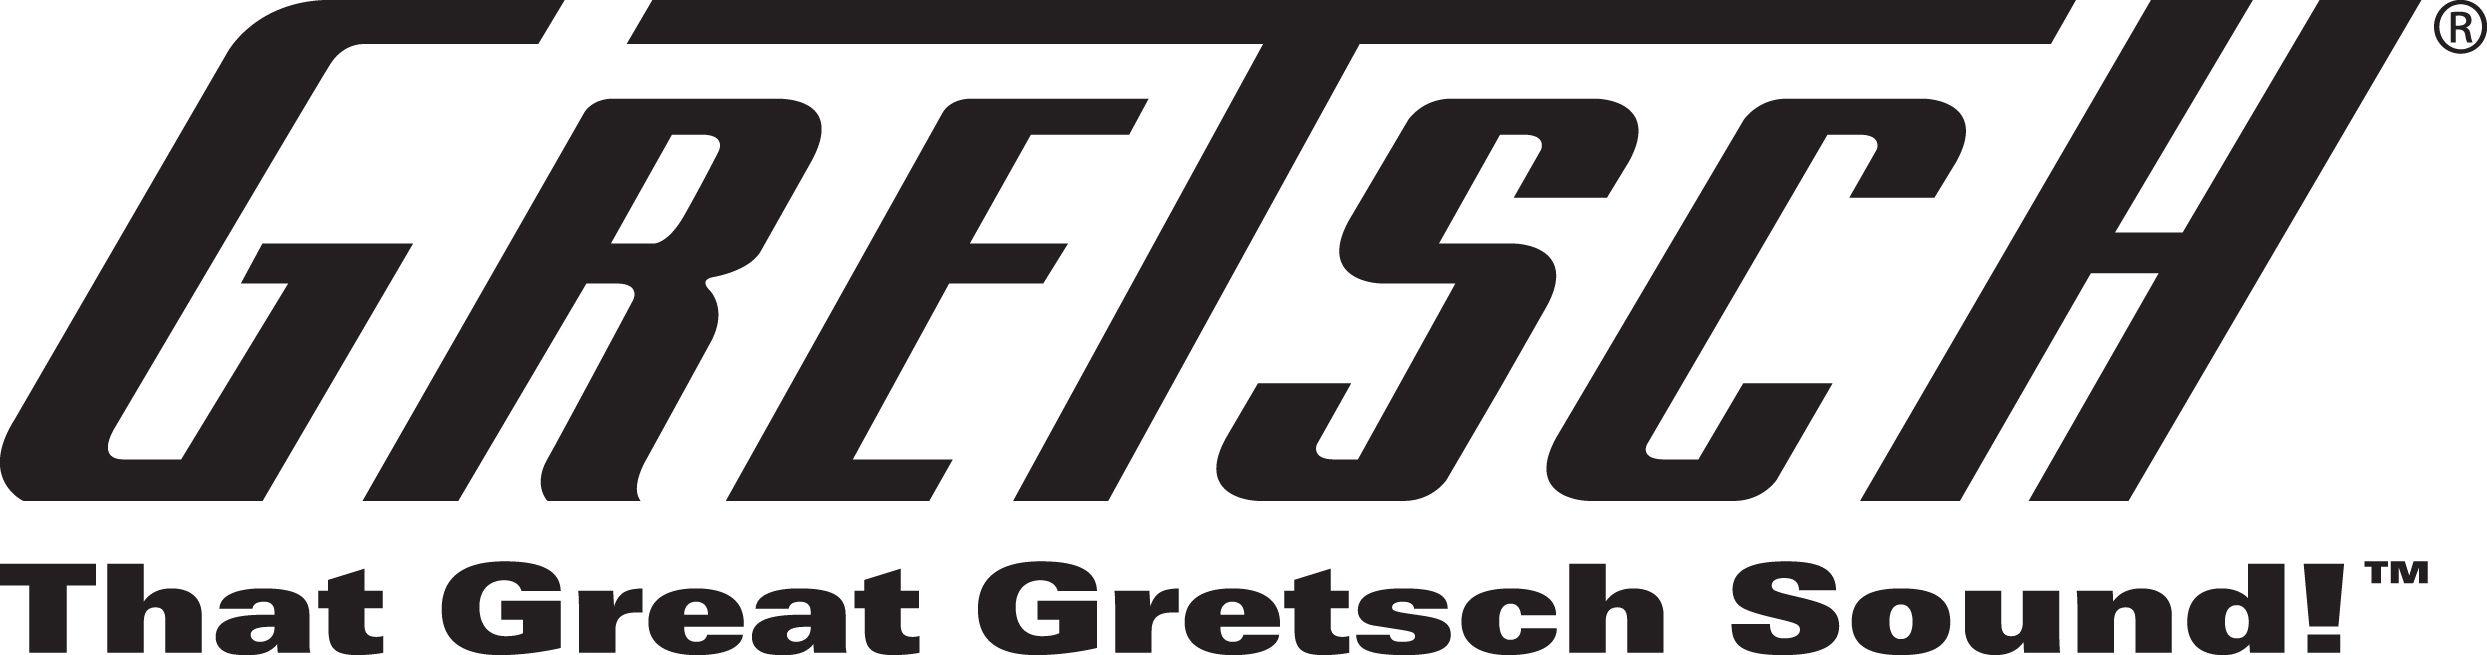 Gretsch Logo - Gretsch Logo Desing. T. i. p. o. g. r. a. f. i. a. s. Guitar logo